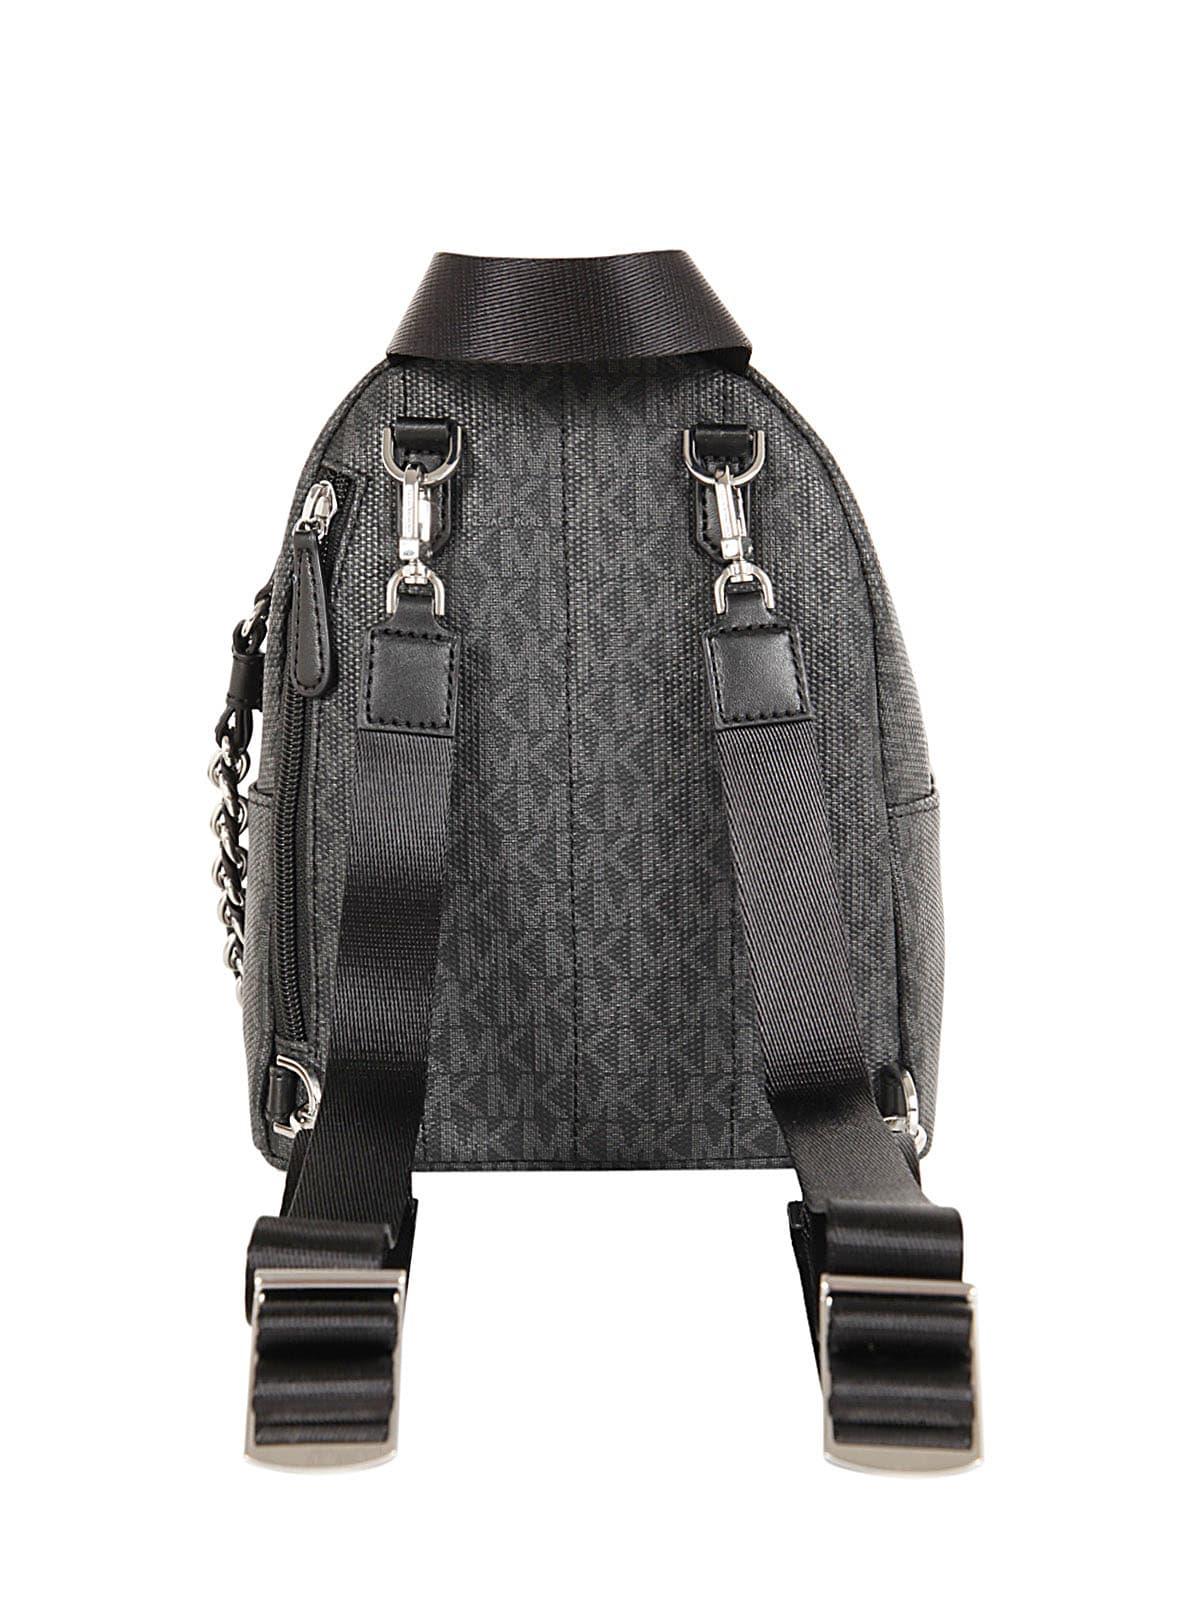 MICHAEL Michael Kors Chain-detailed Backpack in Black | Lyst